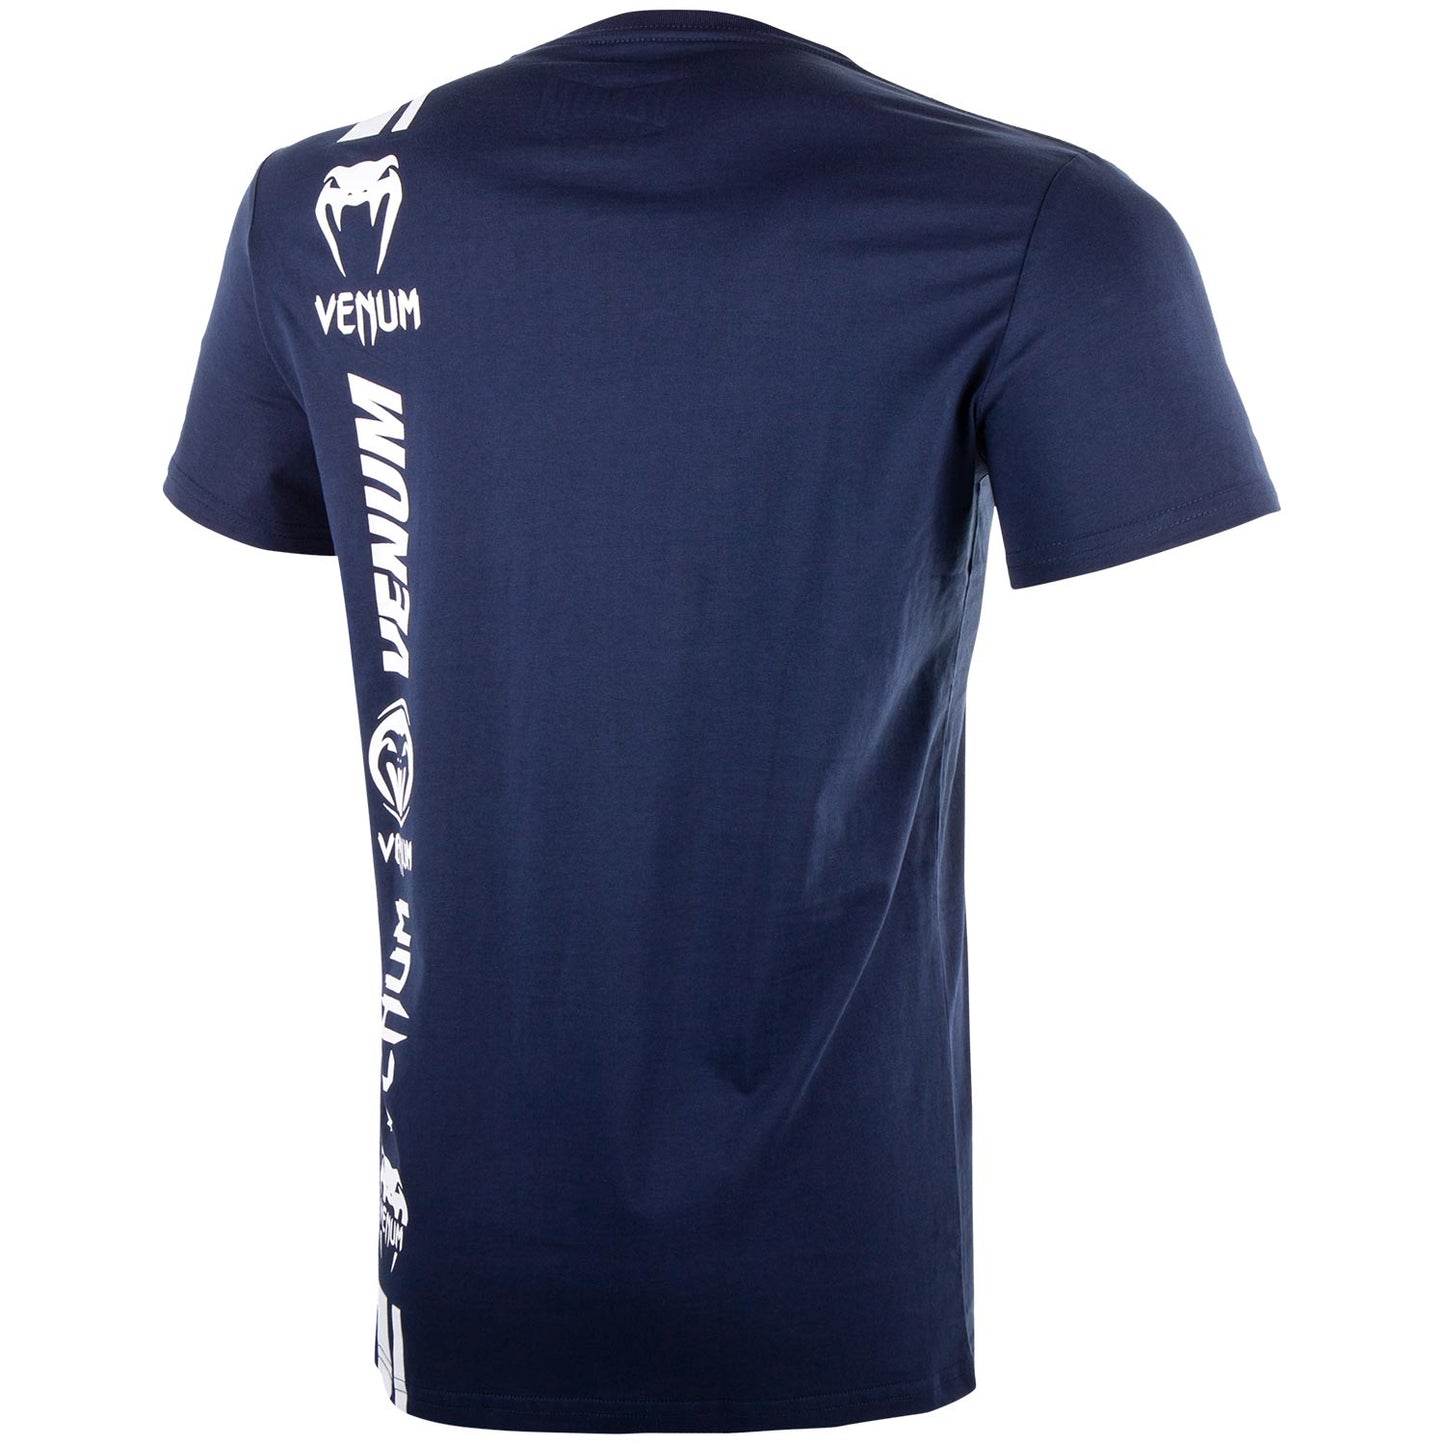 Camiseta Venum Logos - Azul Marino/Blanco